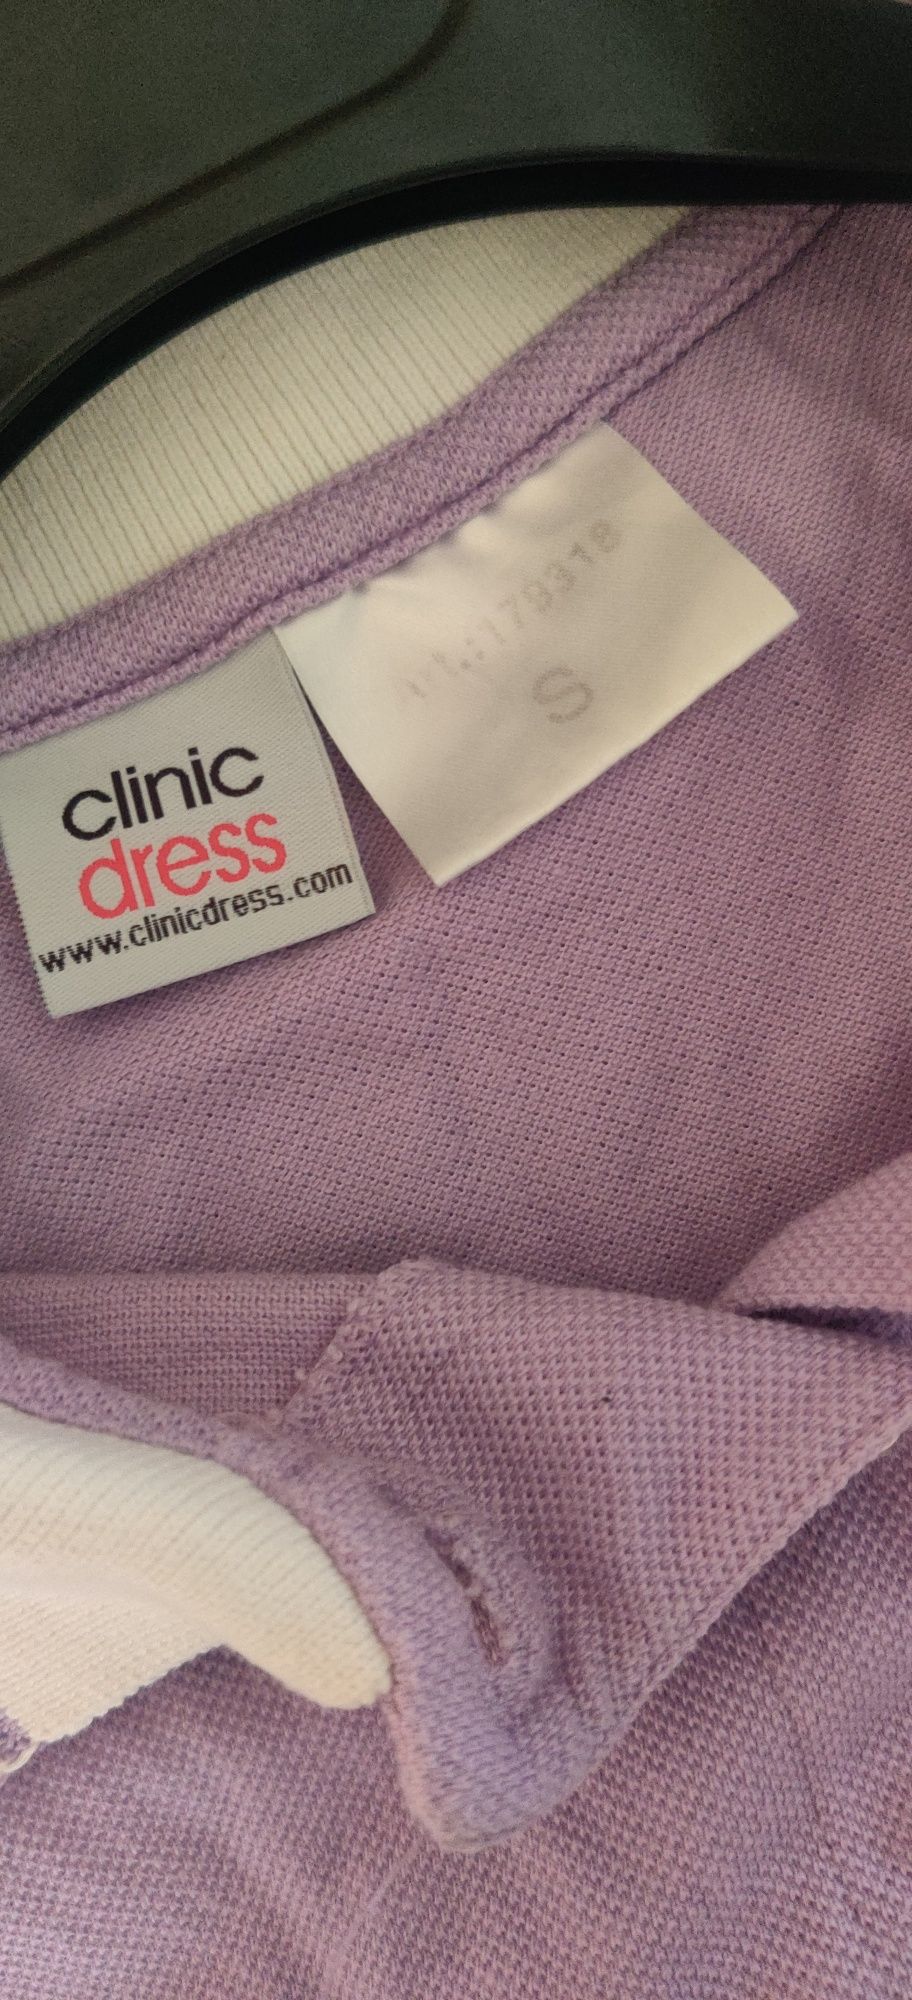 Polo clinic dress